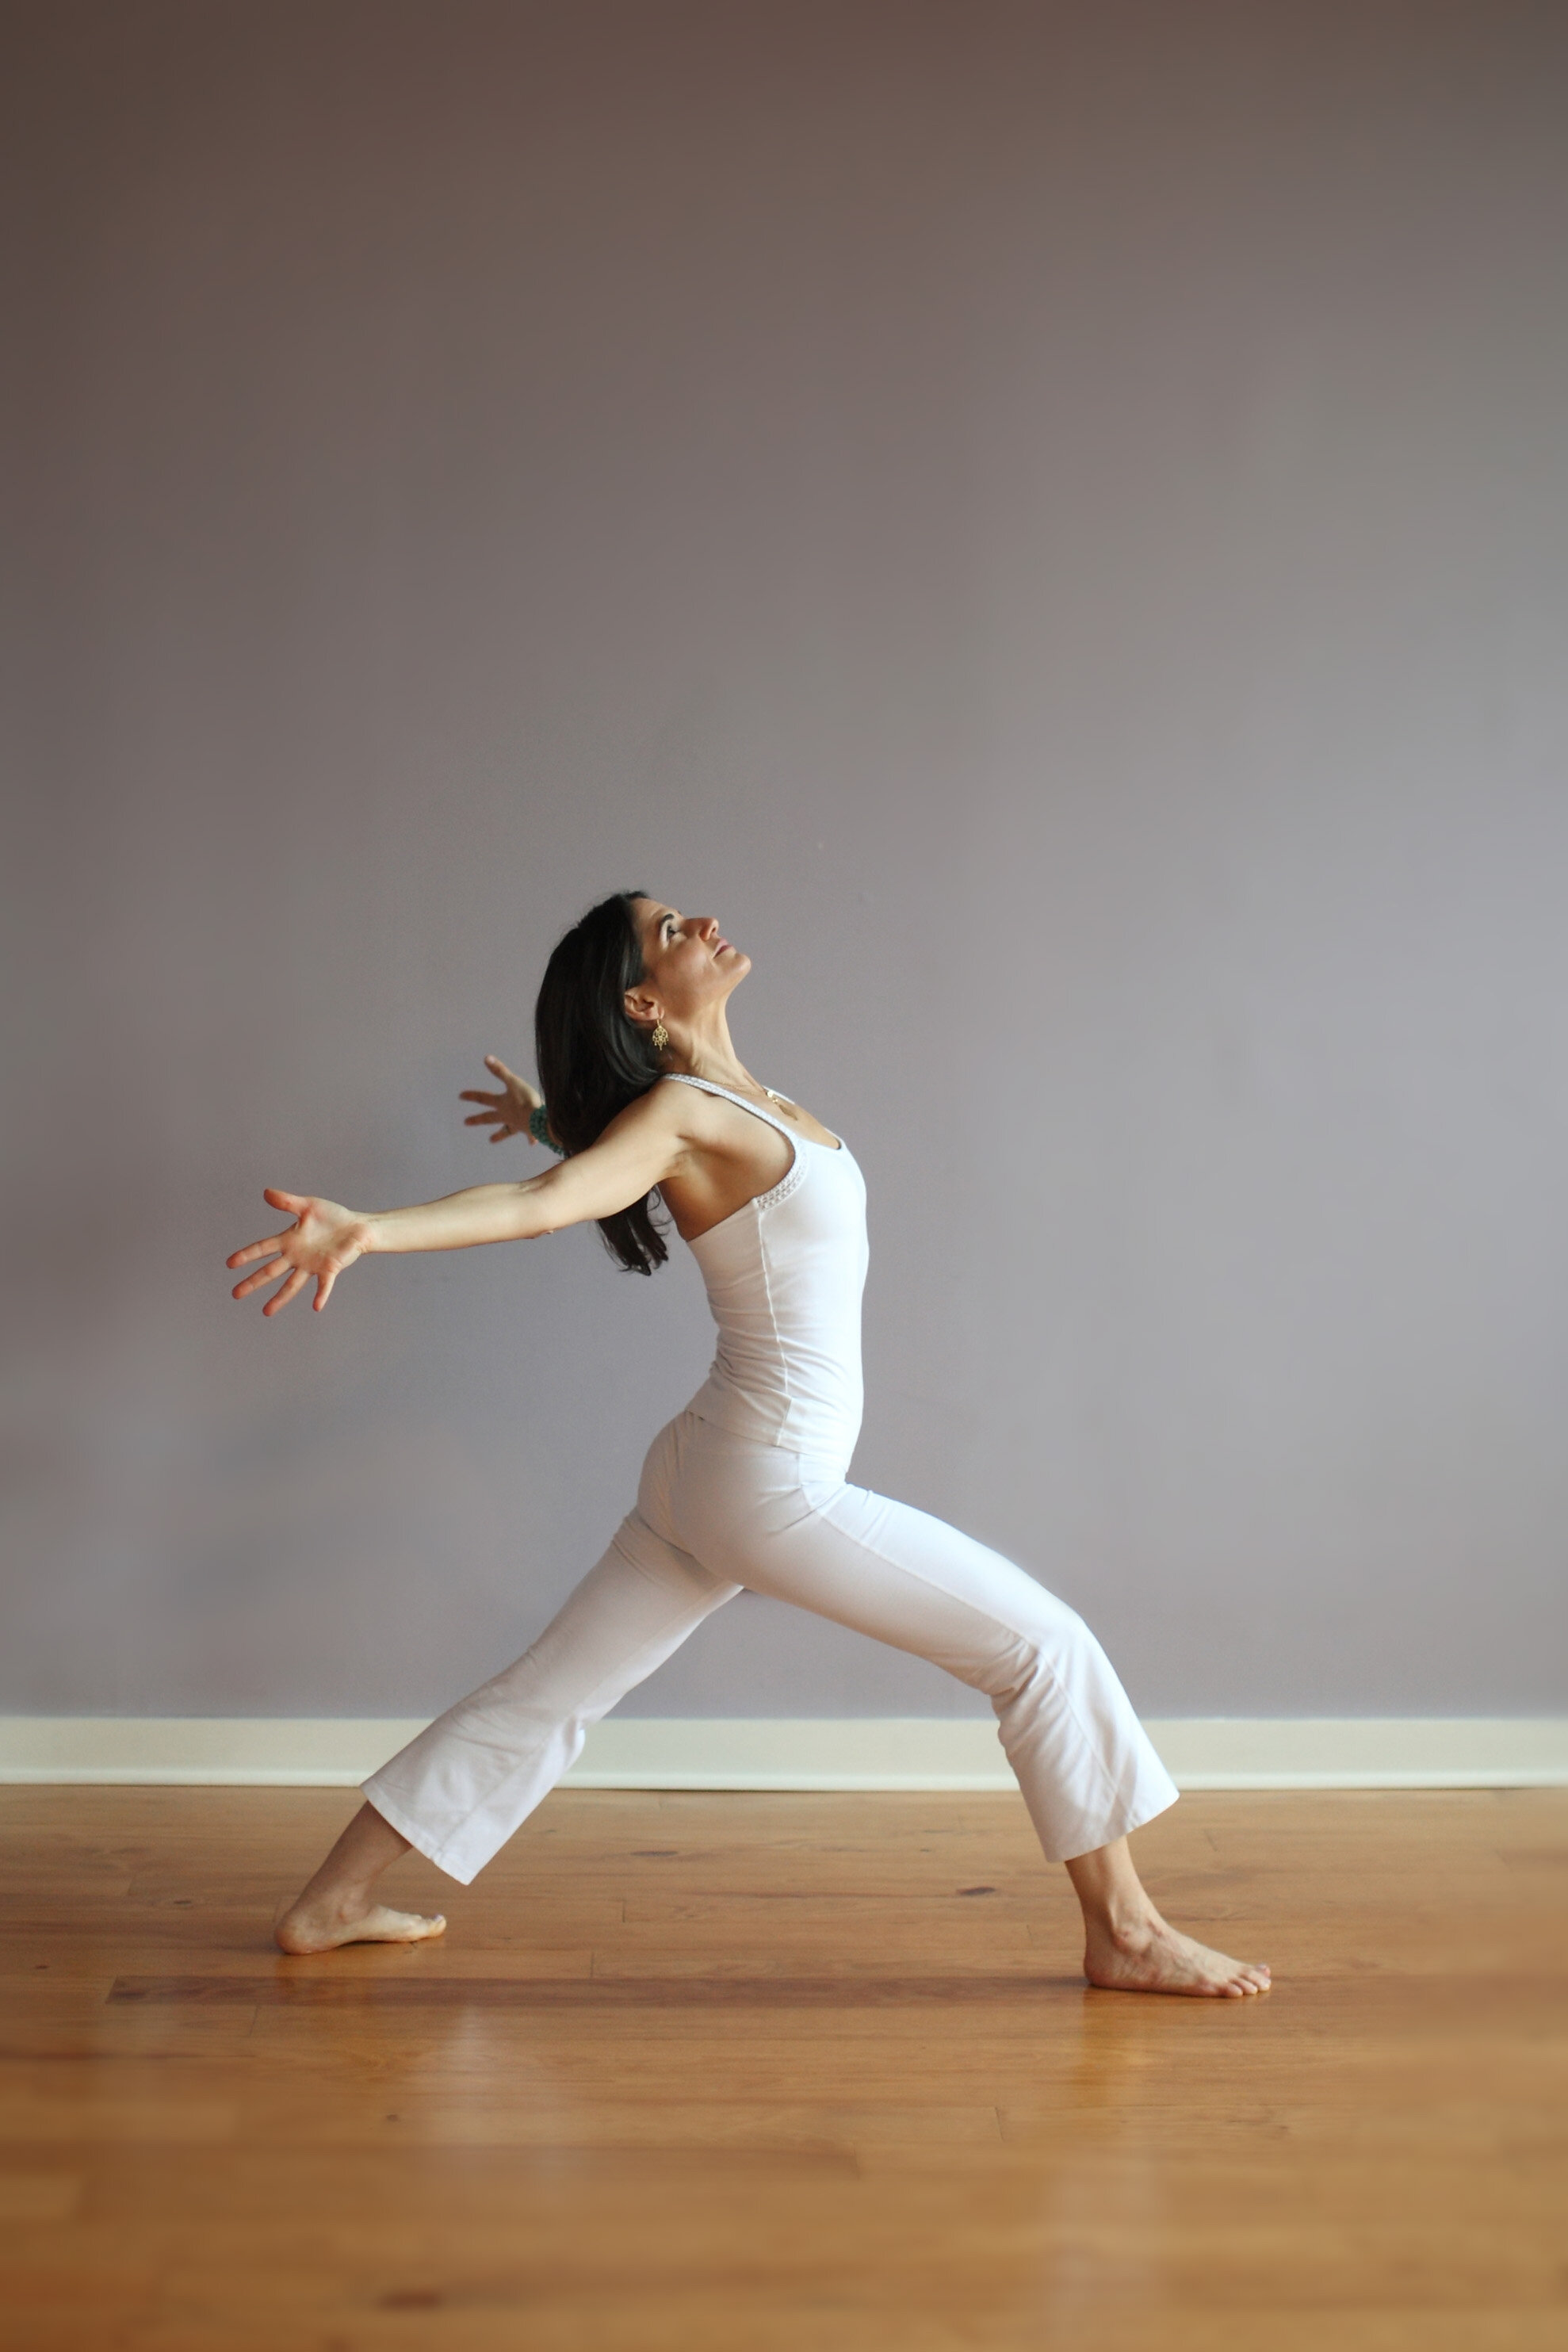 Mindful Movement & Dance Meditation